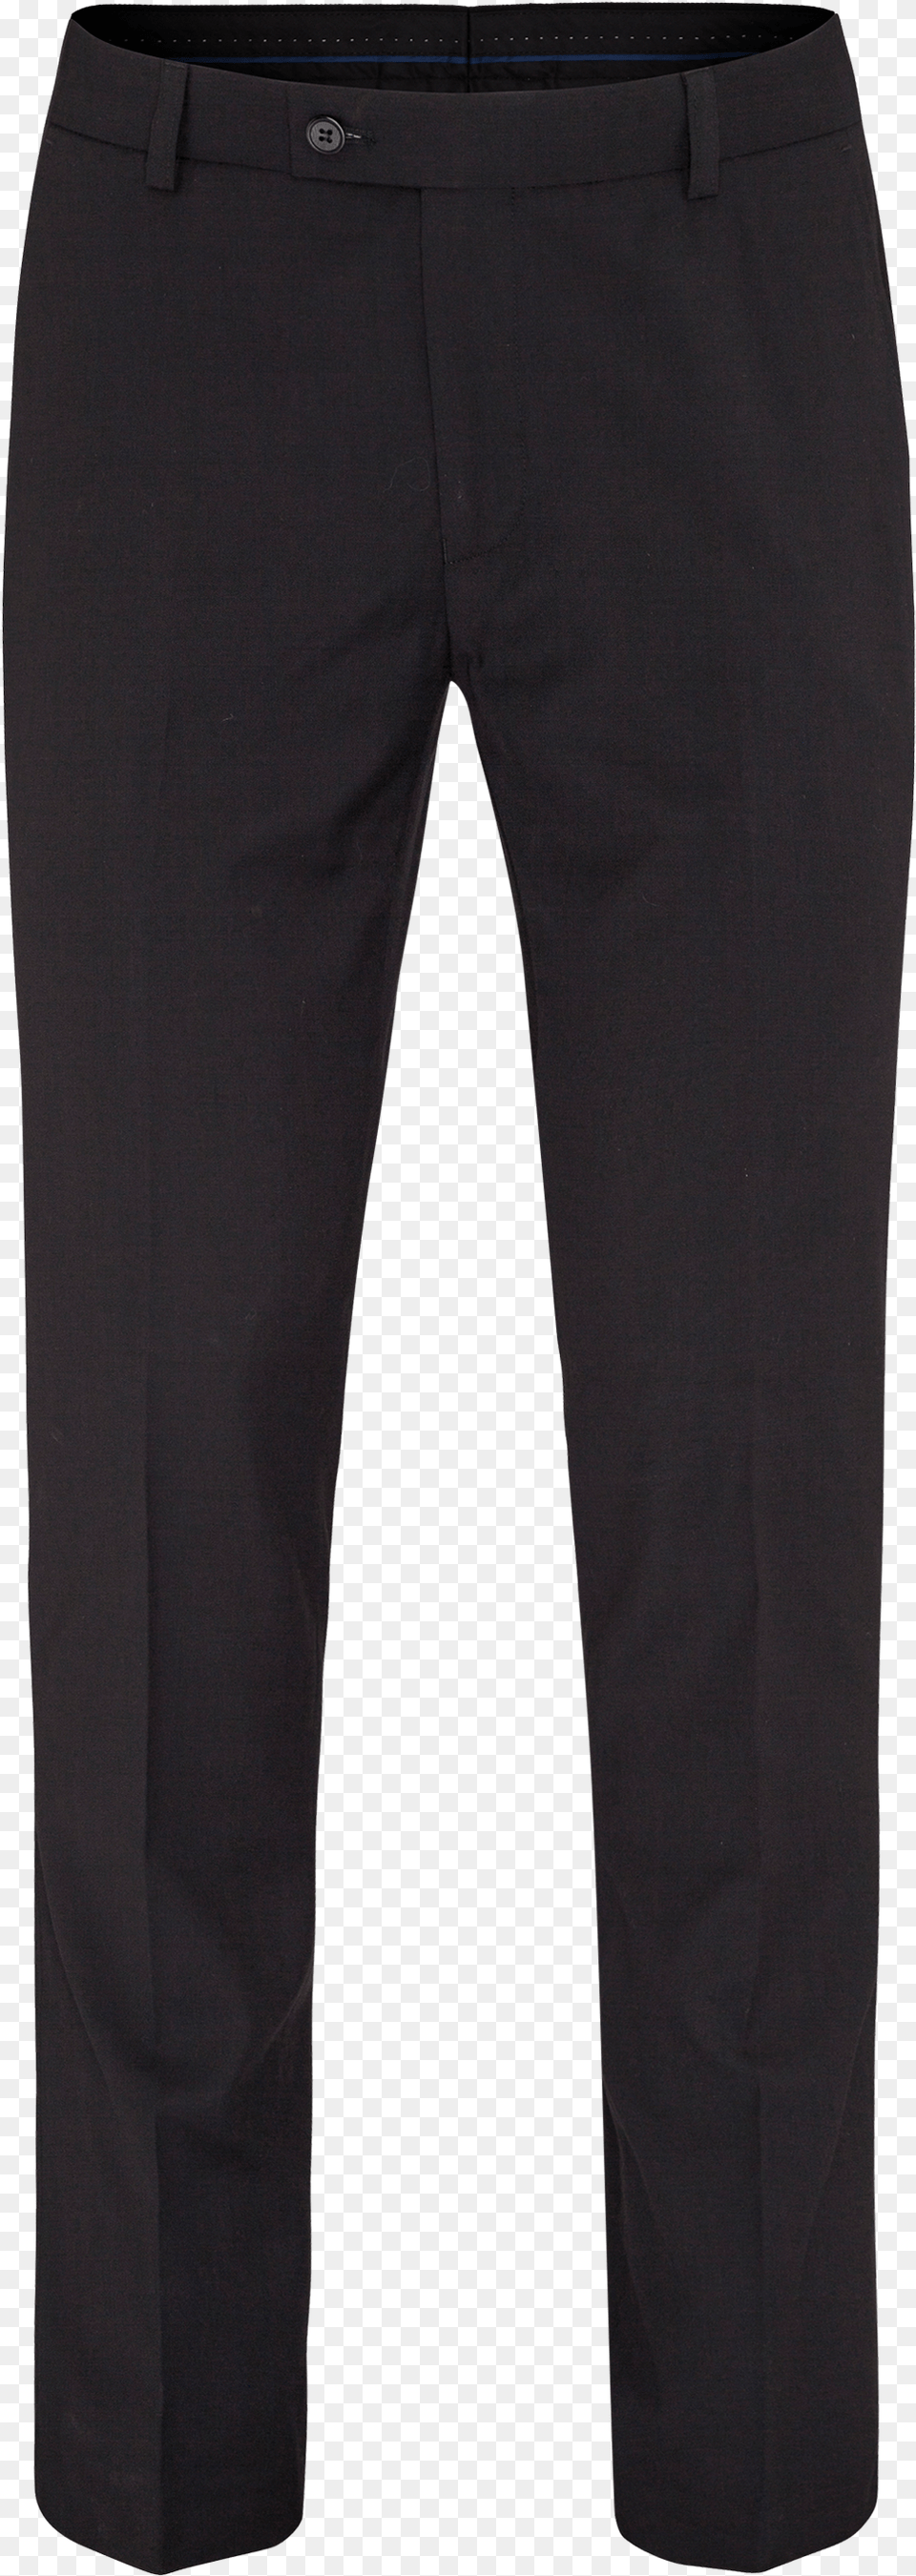 Pants Black Dress Pantalon Chandal Primark Caqui, Clothing, Jeans Free Transparent Png